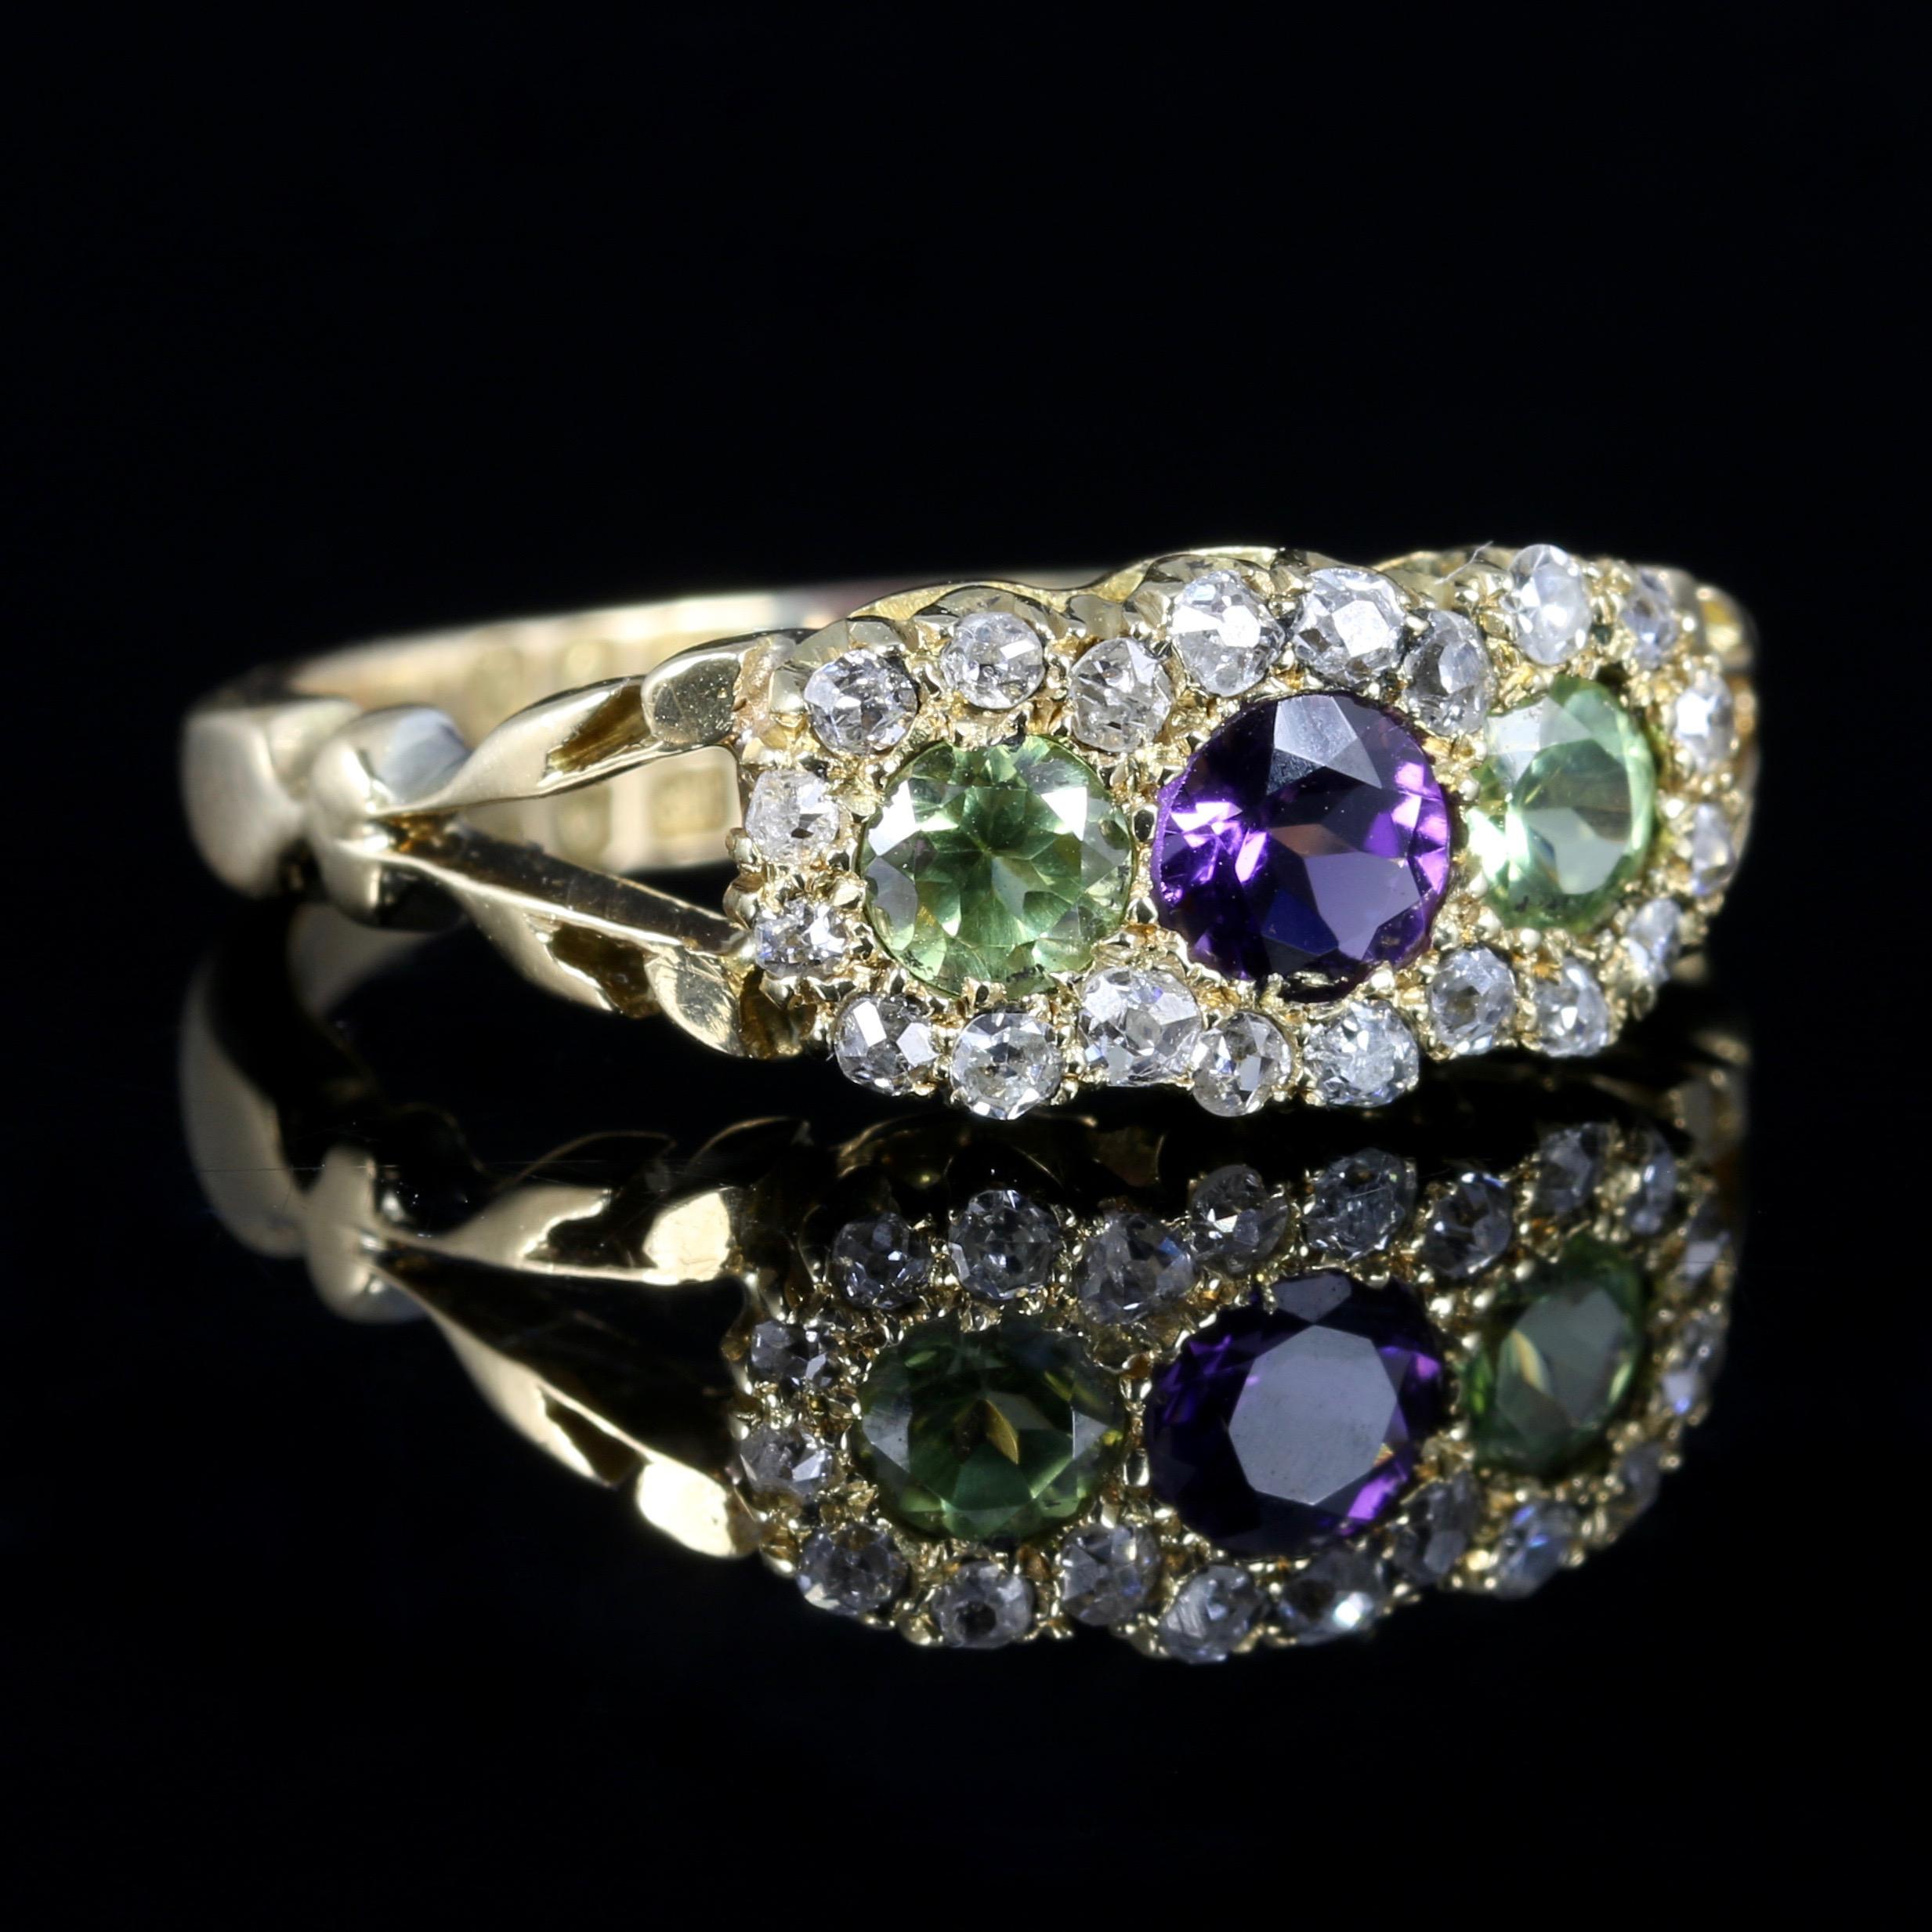 Women's Antique Suffragette Victorian Ring 18 Carat Gold Diamond Amethyst Peridot